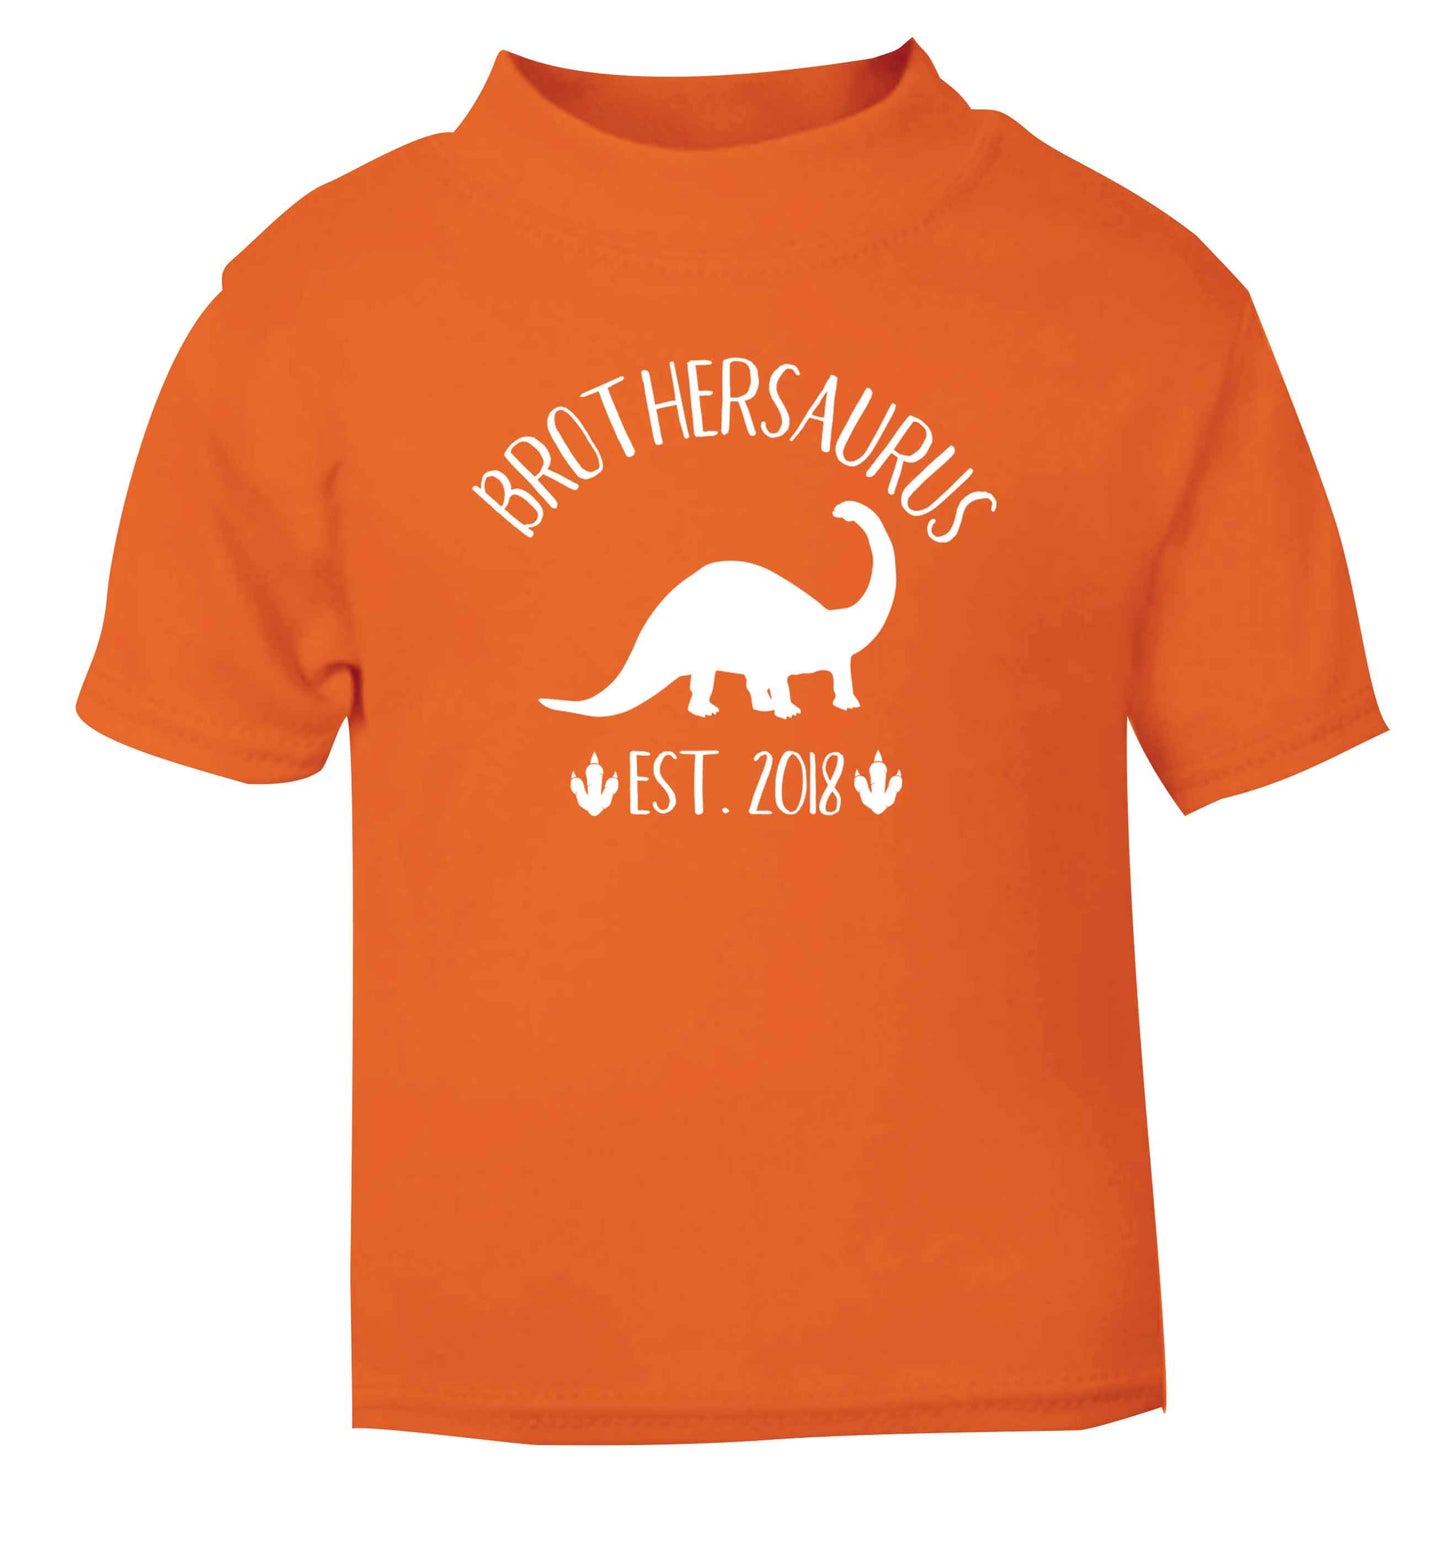 Personalised brothersaurus since (custom date) orange Baby Toddler Tshirt 2 Years